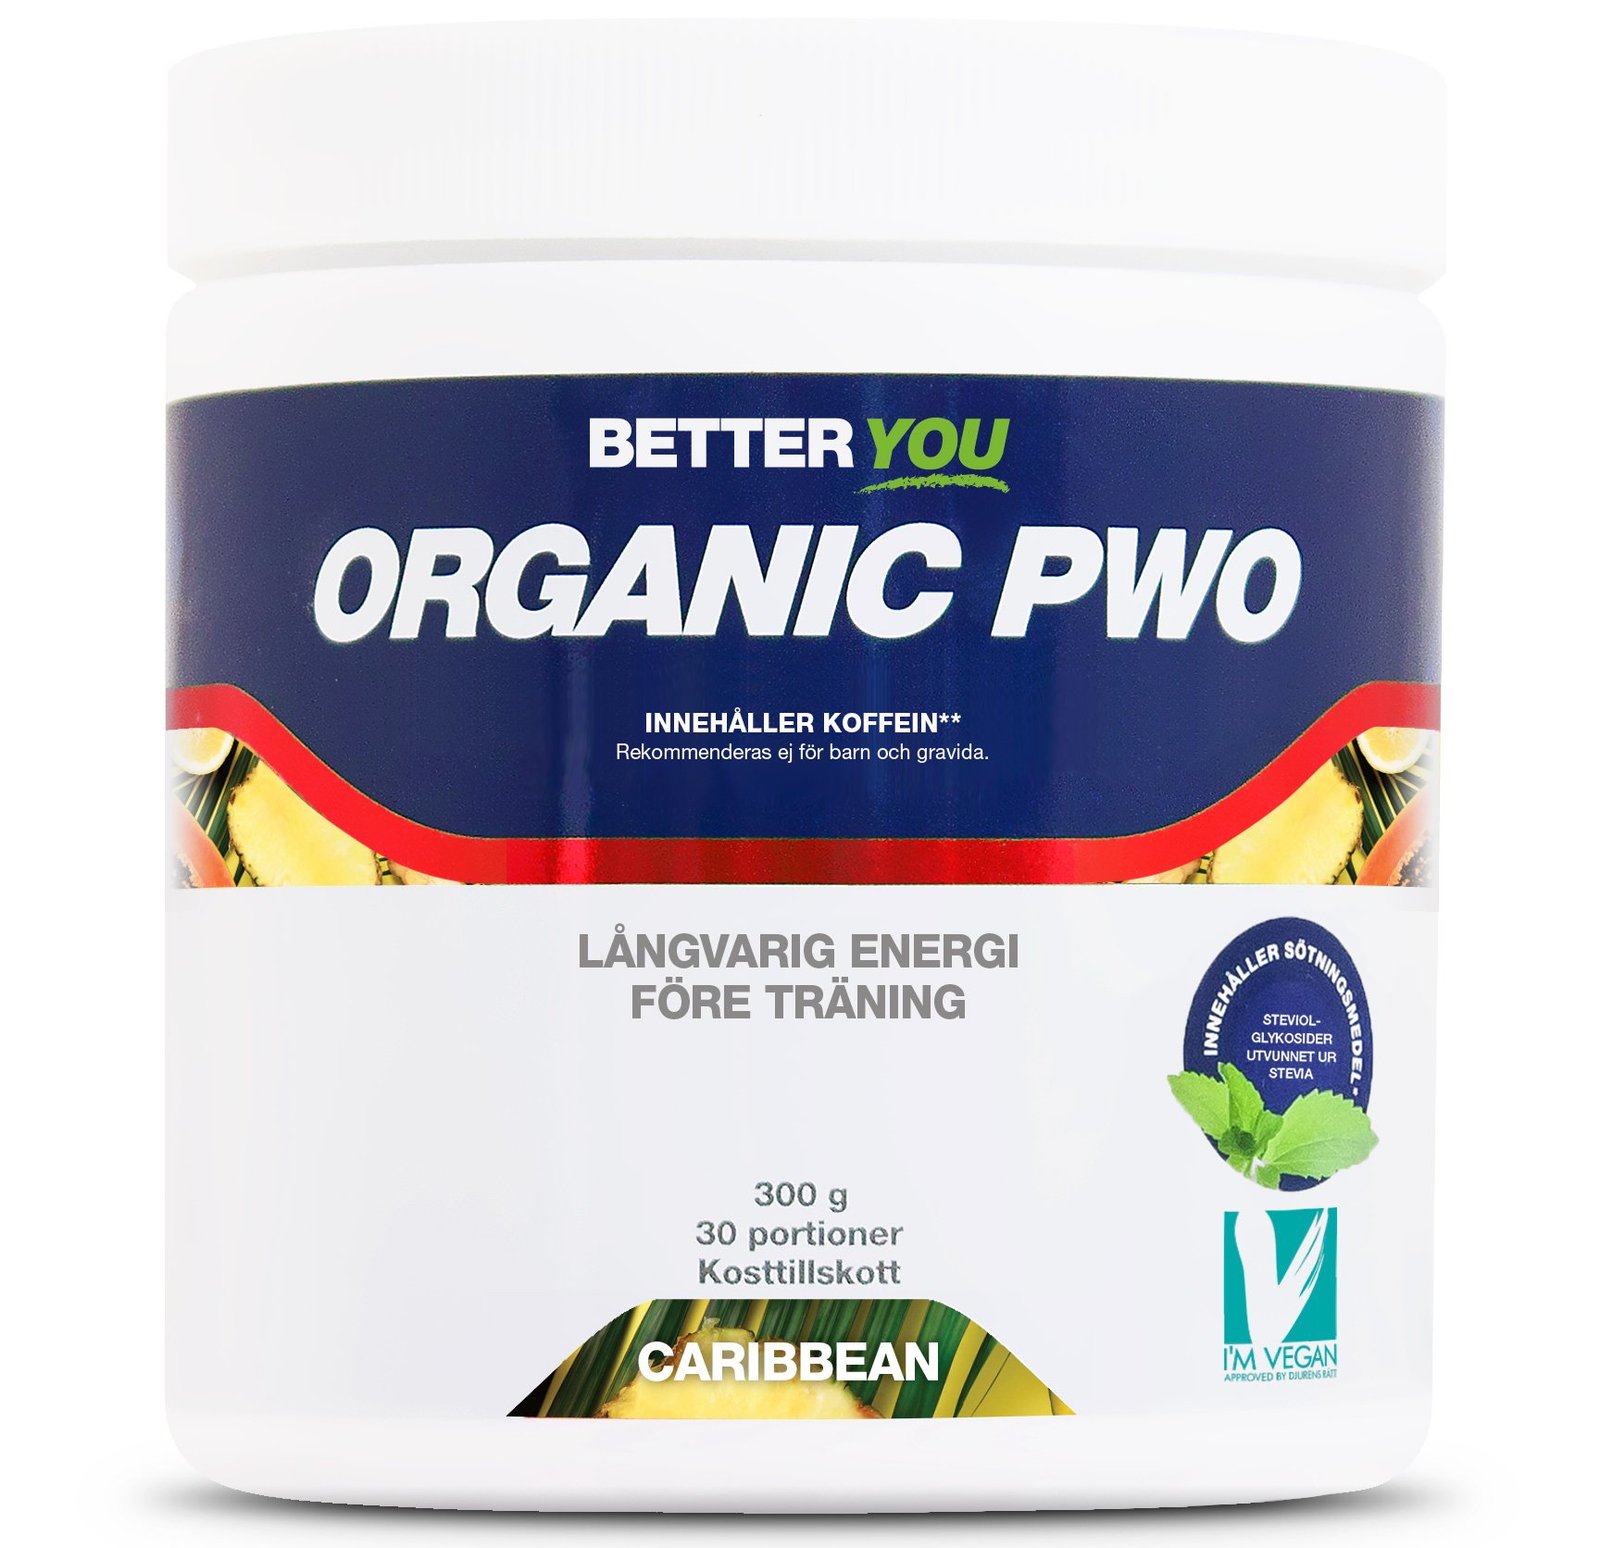 Better You Organic PWO Caribbean 300g